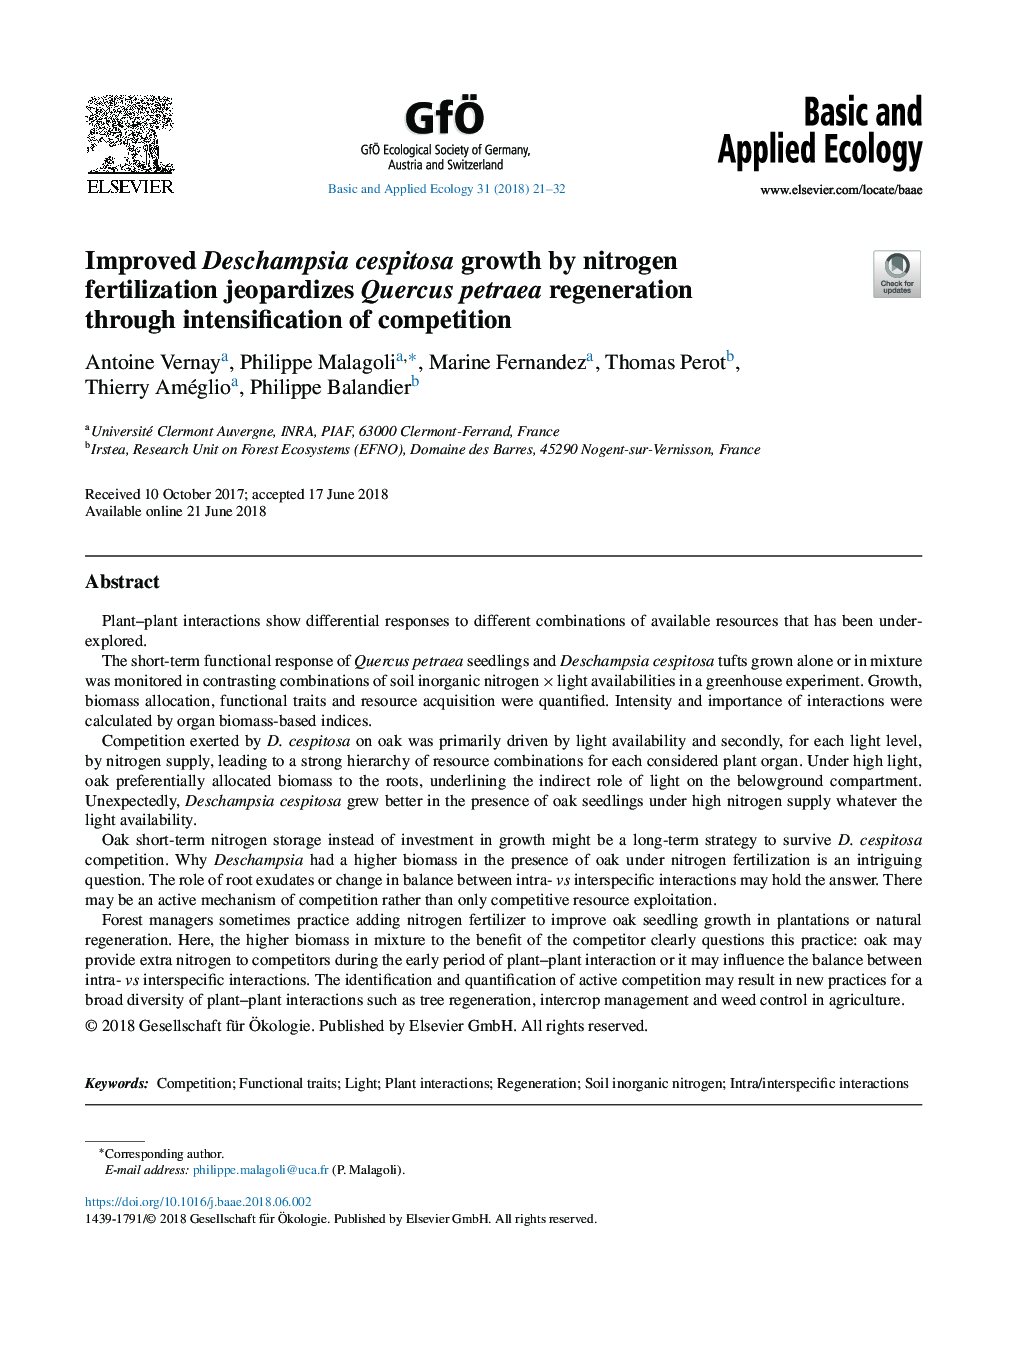 Improved Deschampsia cespitosa growth by nitrogen fertilization jeopardizes Quercus petraea regeneration through intensification of competition